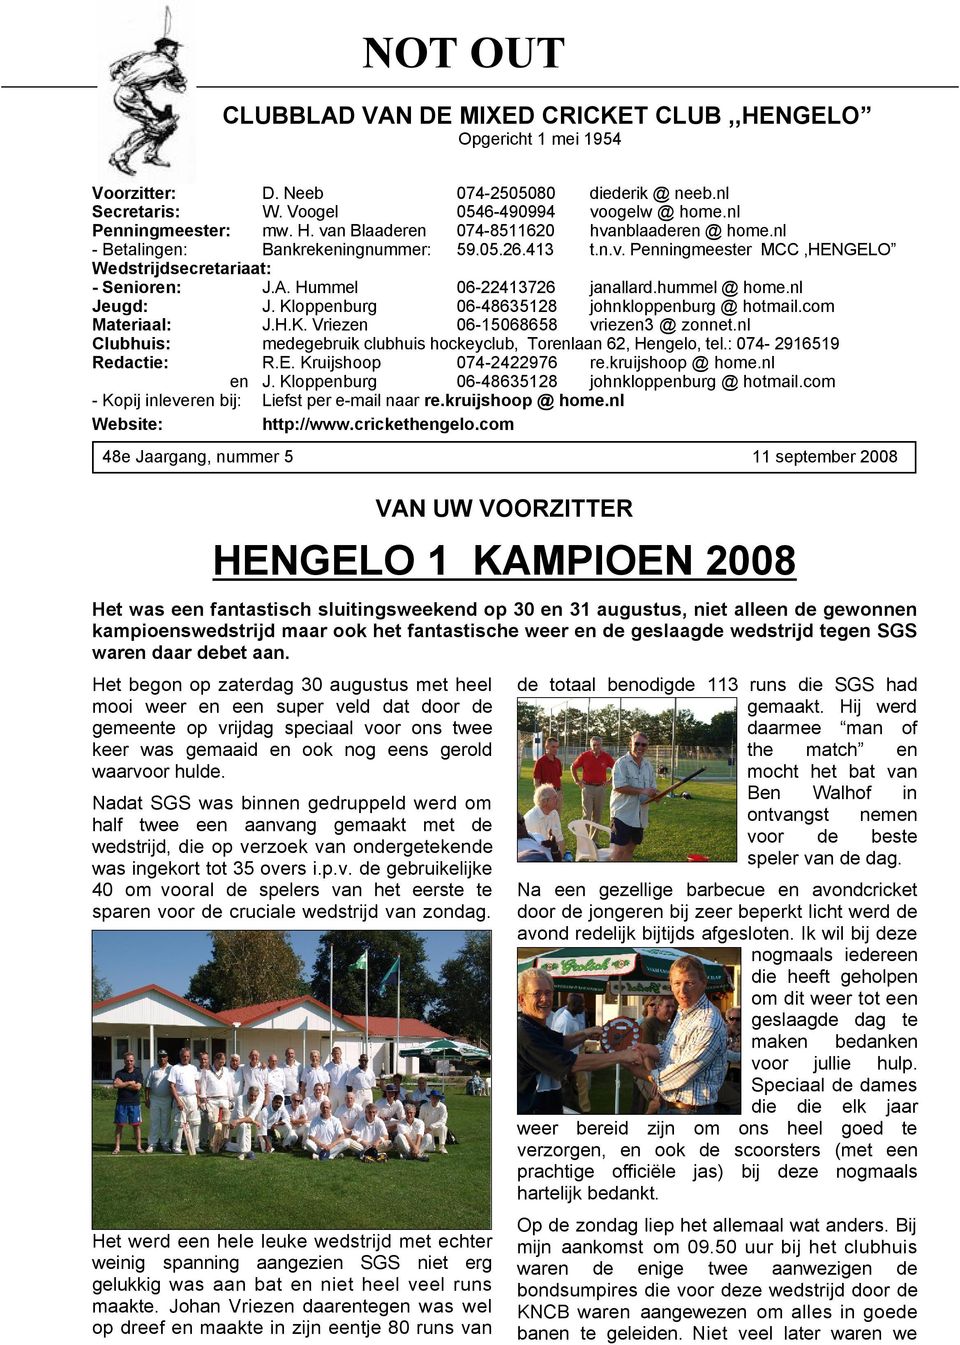 hummel @ home.nl Jeugd: J. Kloppenburg 06-48635128 johnkloppenburg @ hotmail.com Materiaal: J.H.K. Vriezen 06-15068658 vriezen3 @ zonnet.